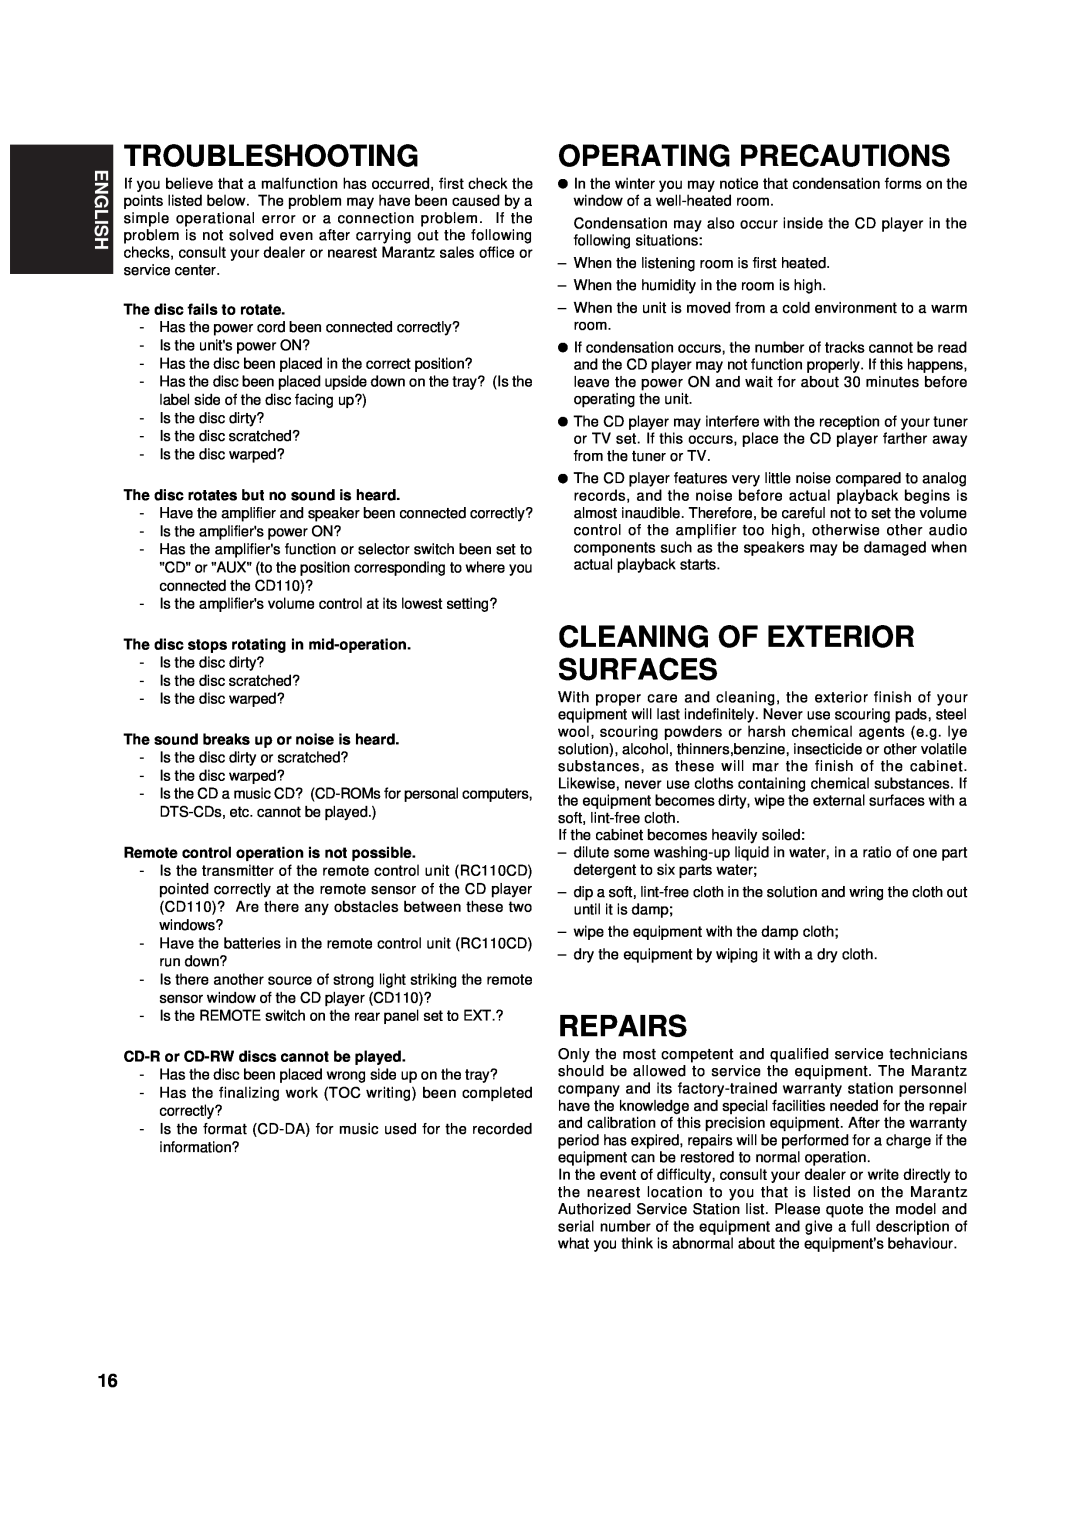 Marantz CD110 manual Troubleshooting, Operating Precautions, Cleaning Of Exterior Surfaces, Repairs, English 